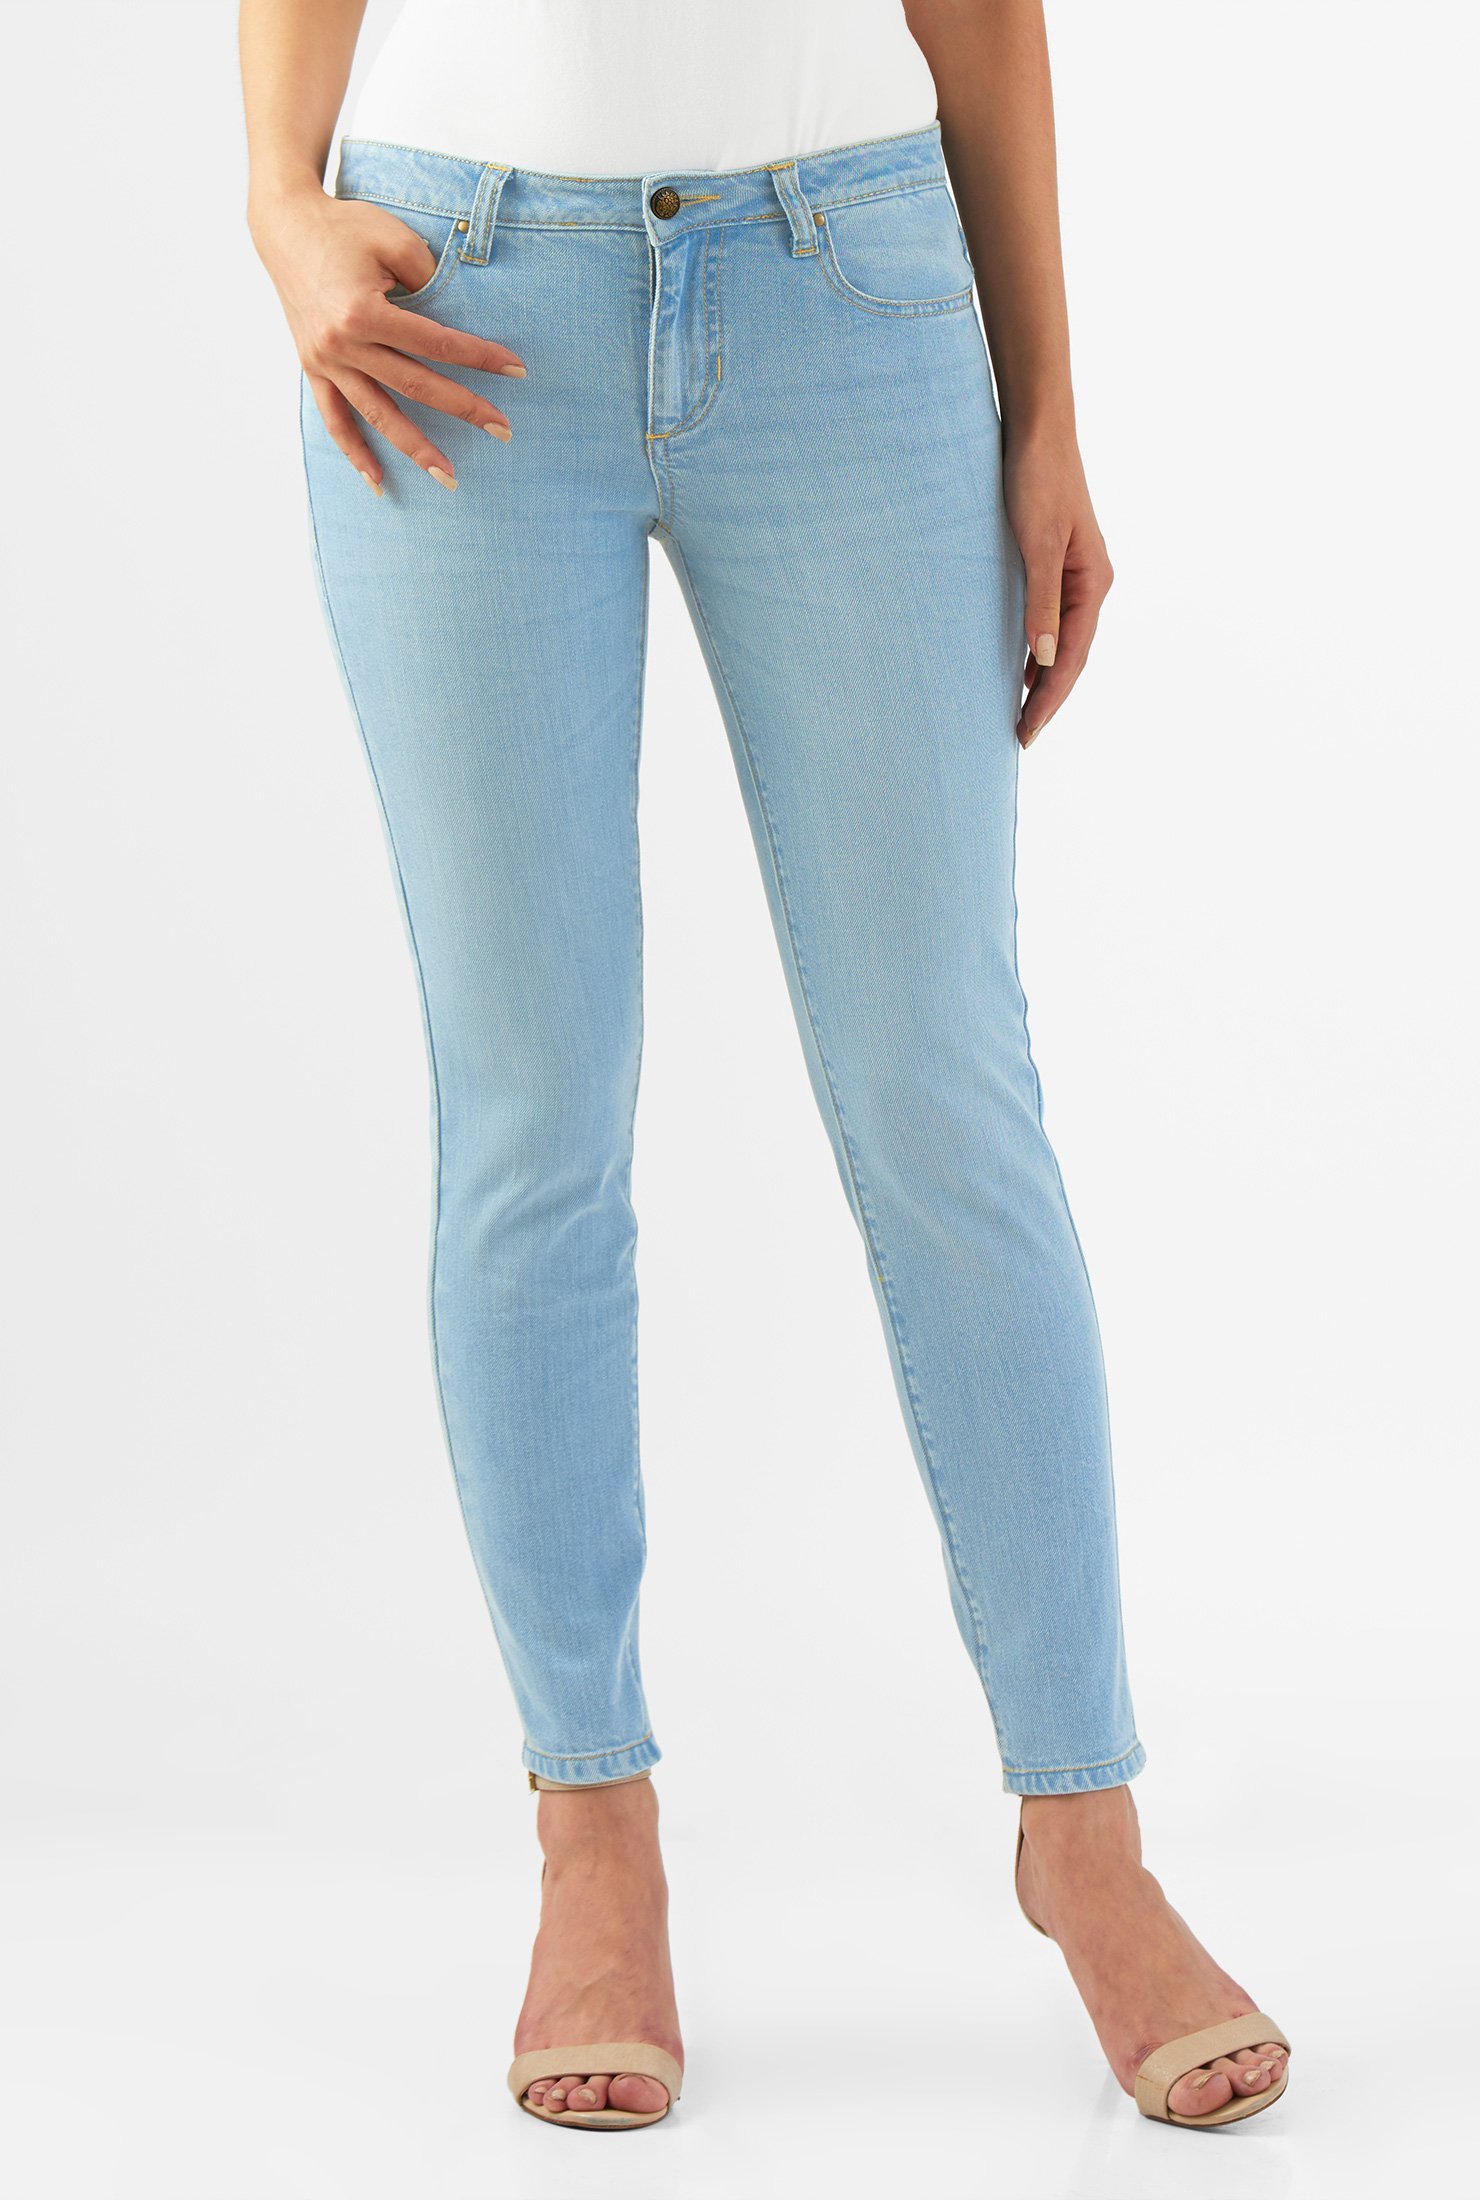 Shop Ice blue denim skinny jeans | eShakti